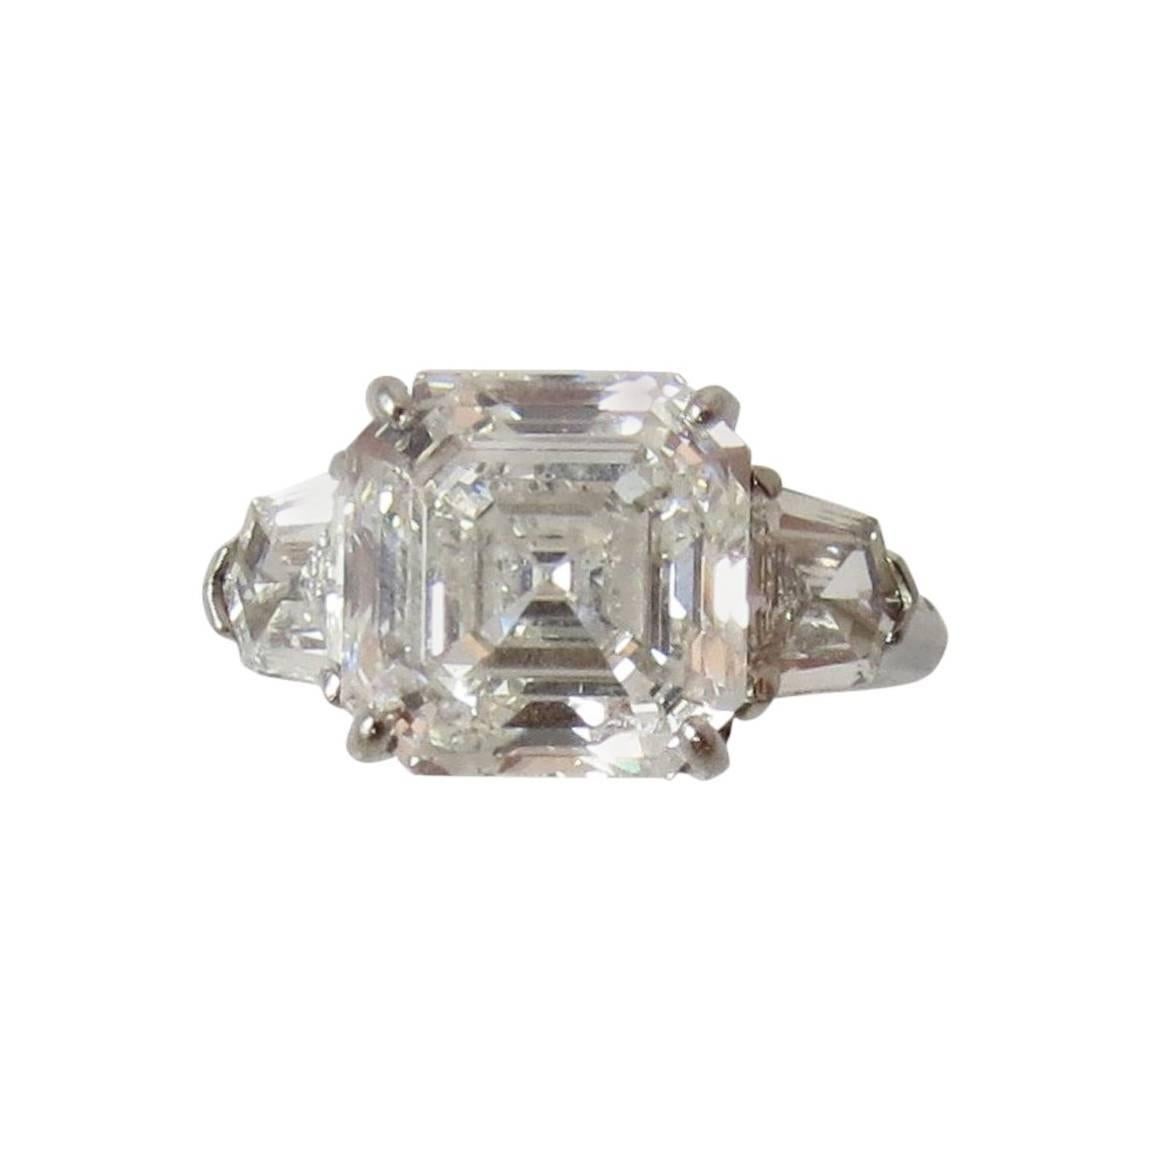 5.01 Carat GIA Cert Square Emerald Cut Diamond "Asscher" 3 Stone Platinum Ring